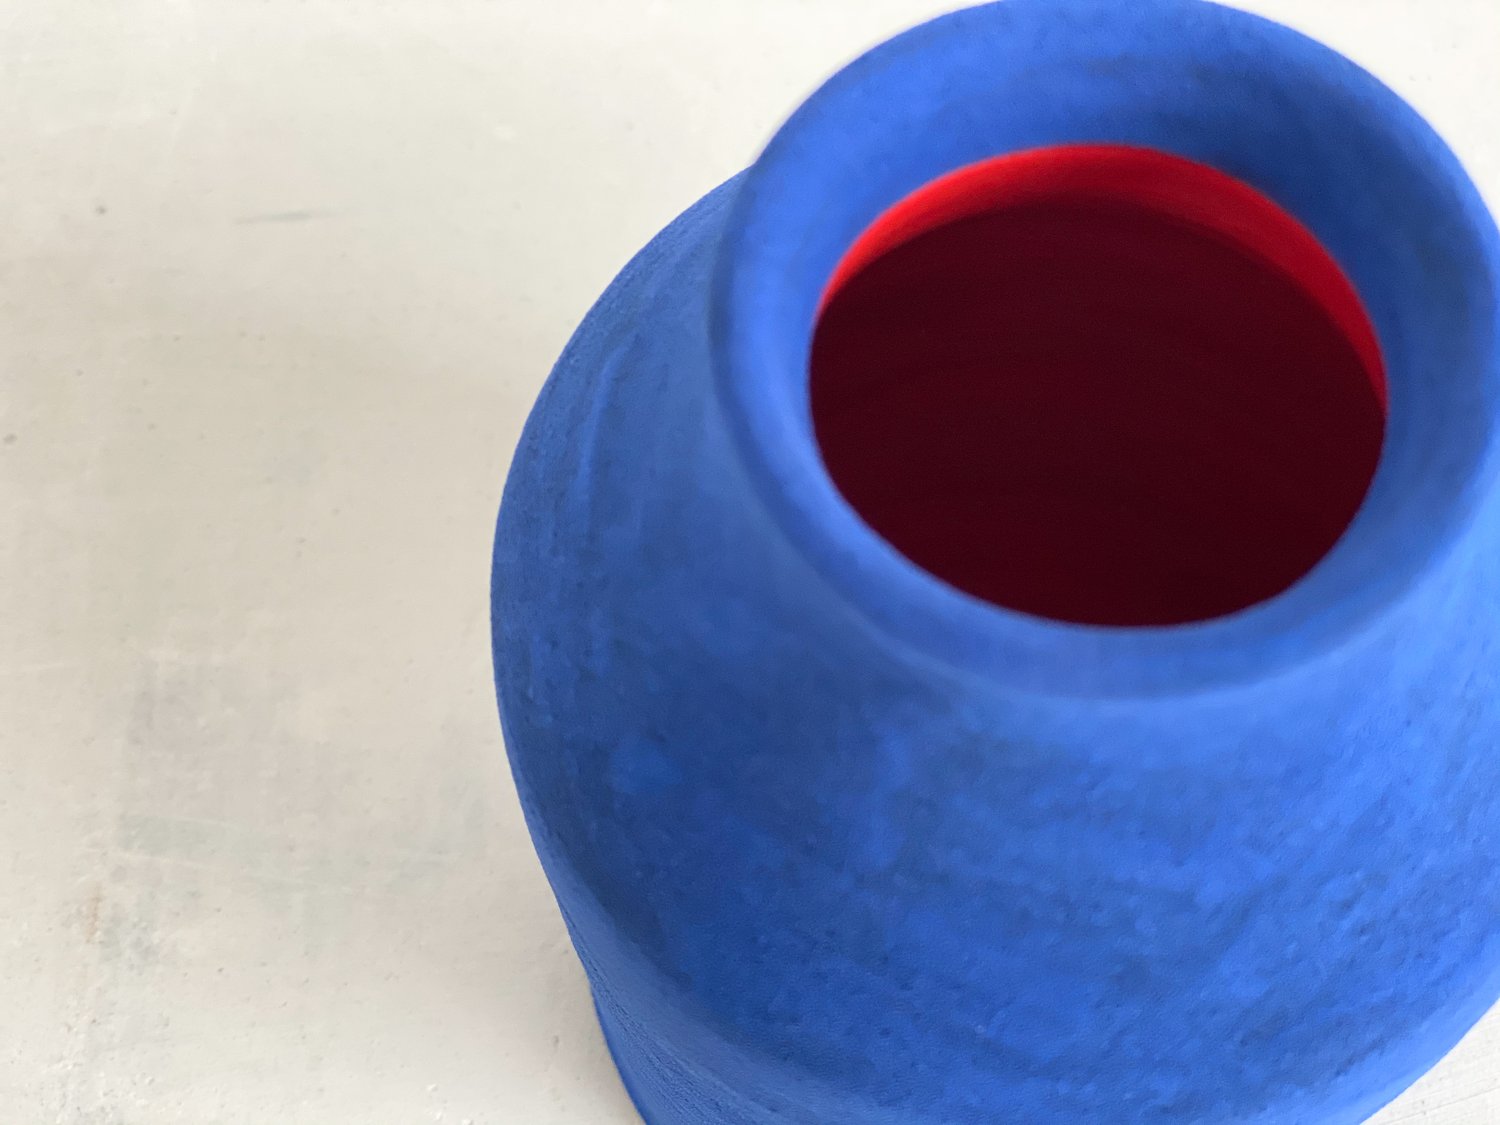 Image of Blue Square Bud Vase